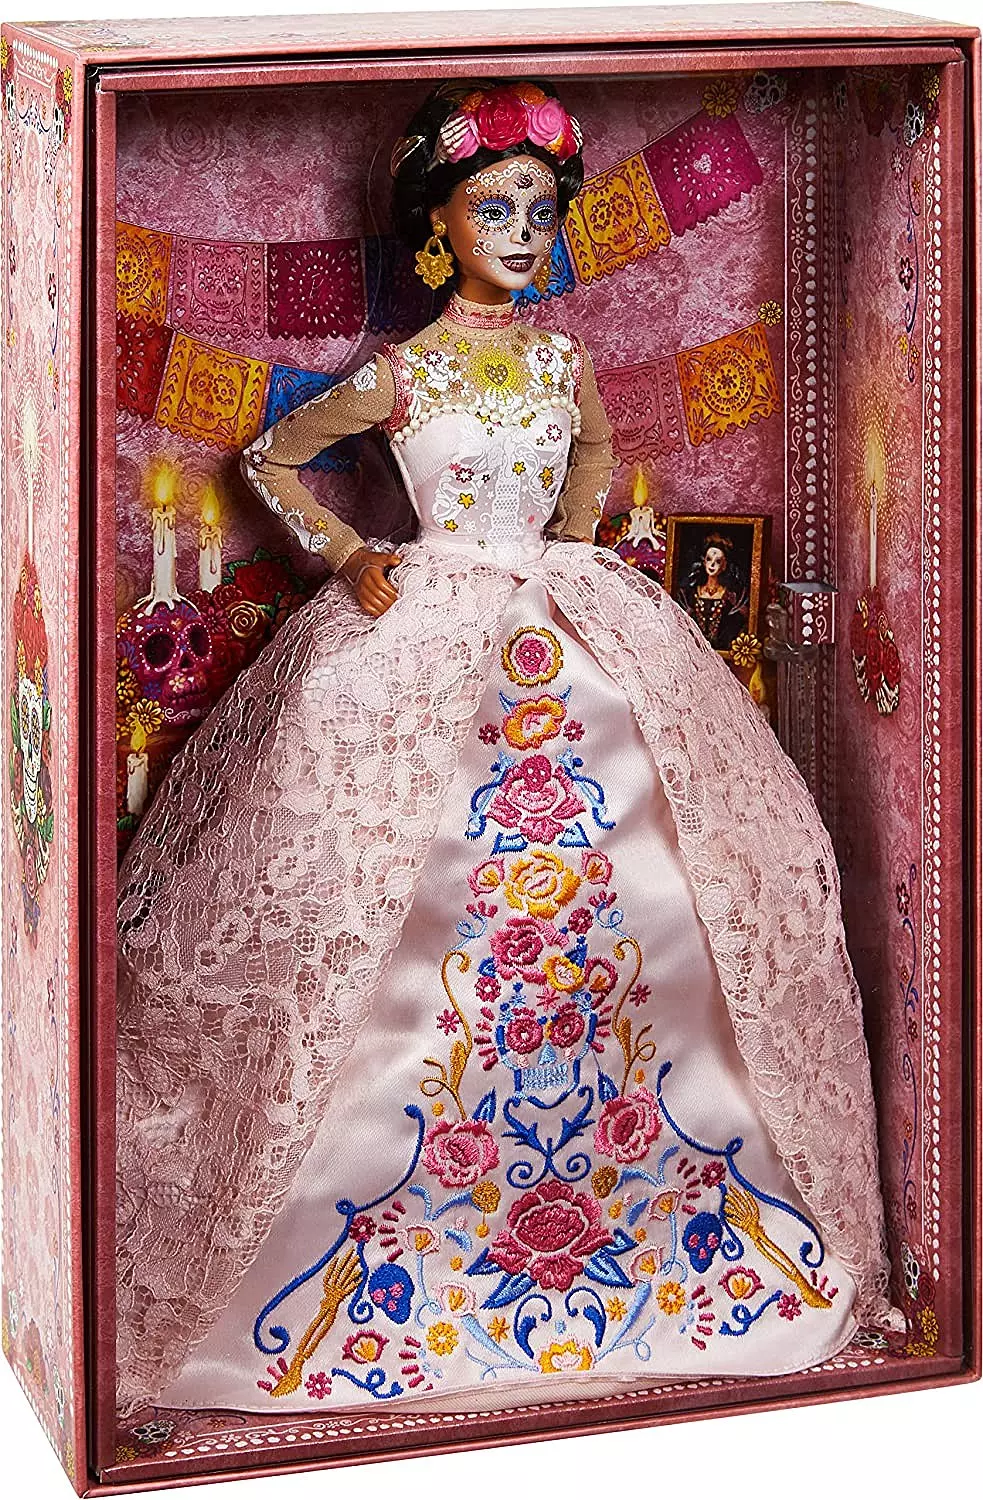 Barbie Releases New Dia De Los Muertos (Day of The Dead) Doll